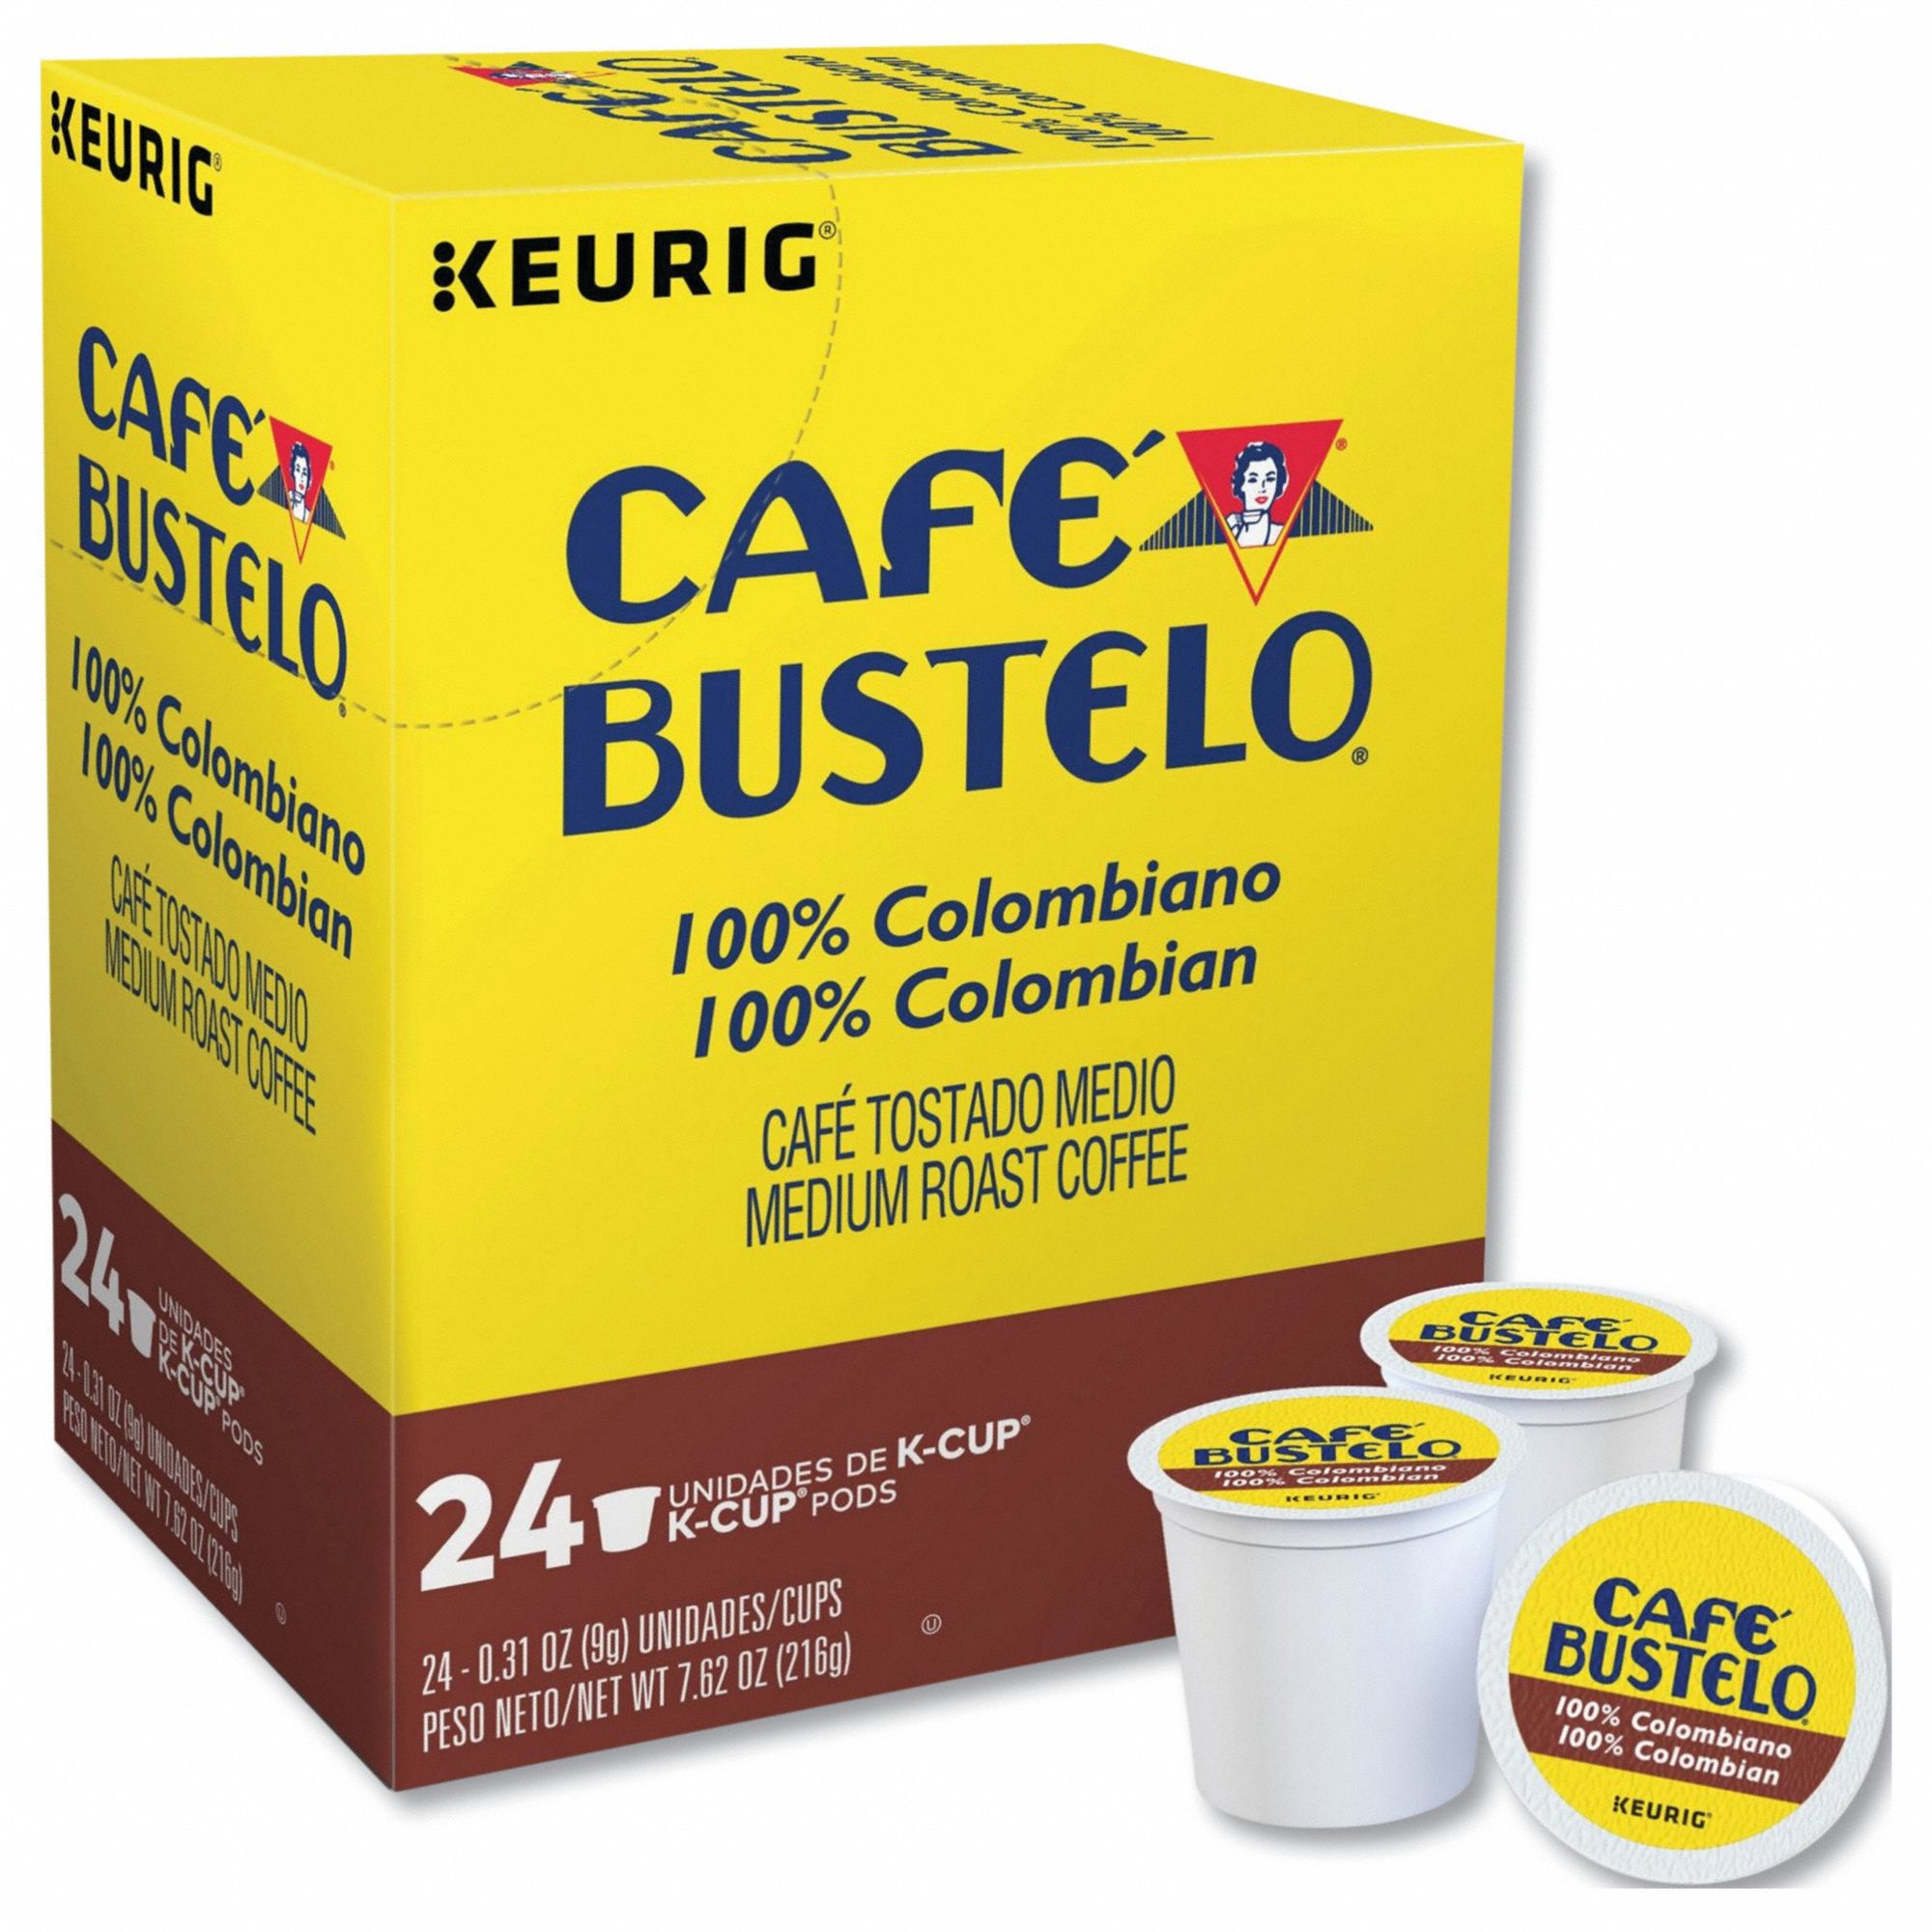 Coffee K-Cup: Caffeinated, Colombian, Pod, 0.31 oz Pack Wt, 7.44 oz Net Wt, Dark, 24 PK